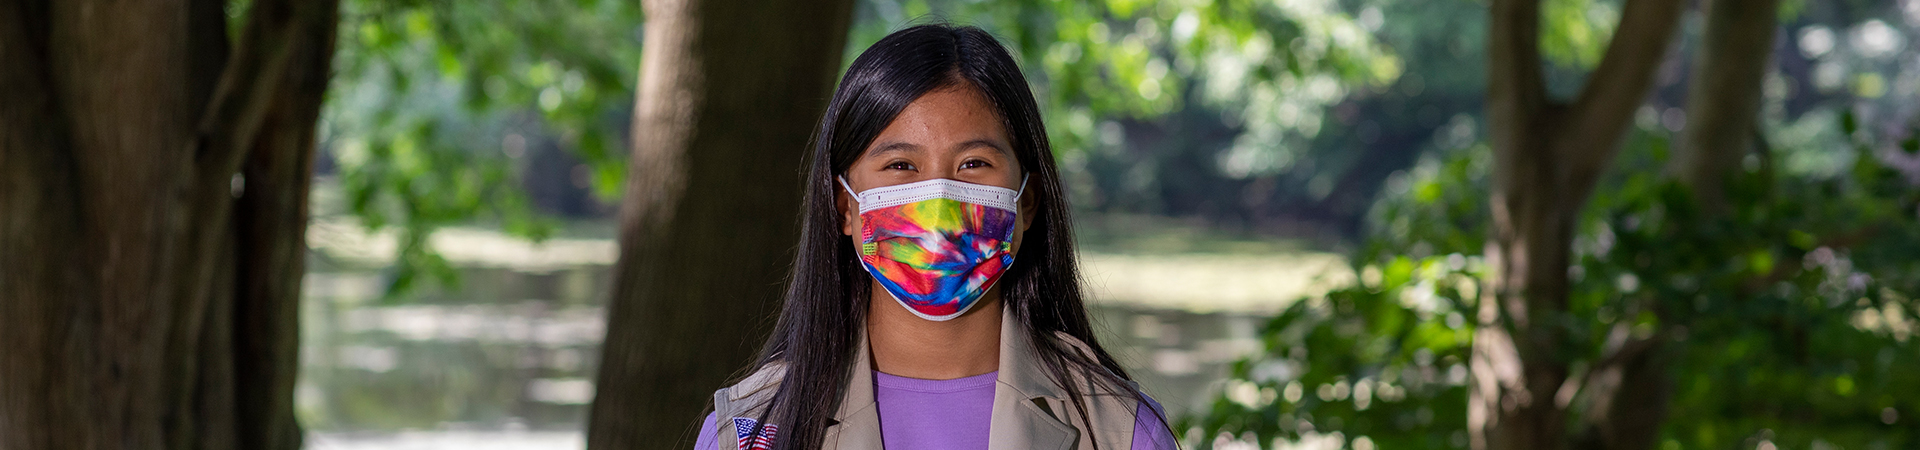  older girl scout wearing mask 